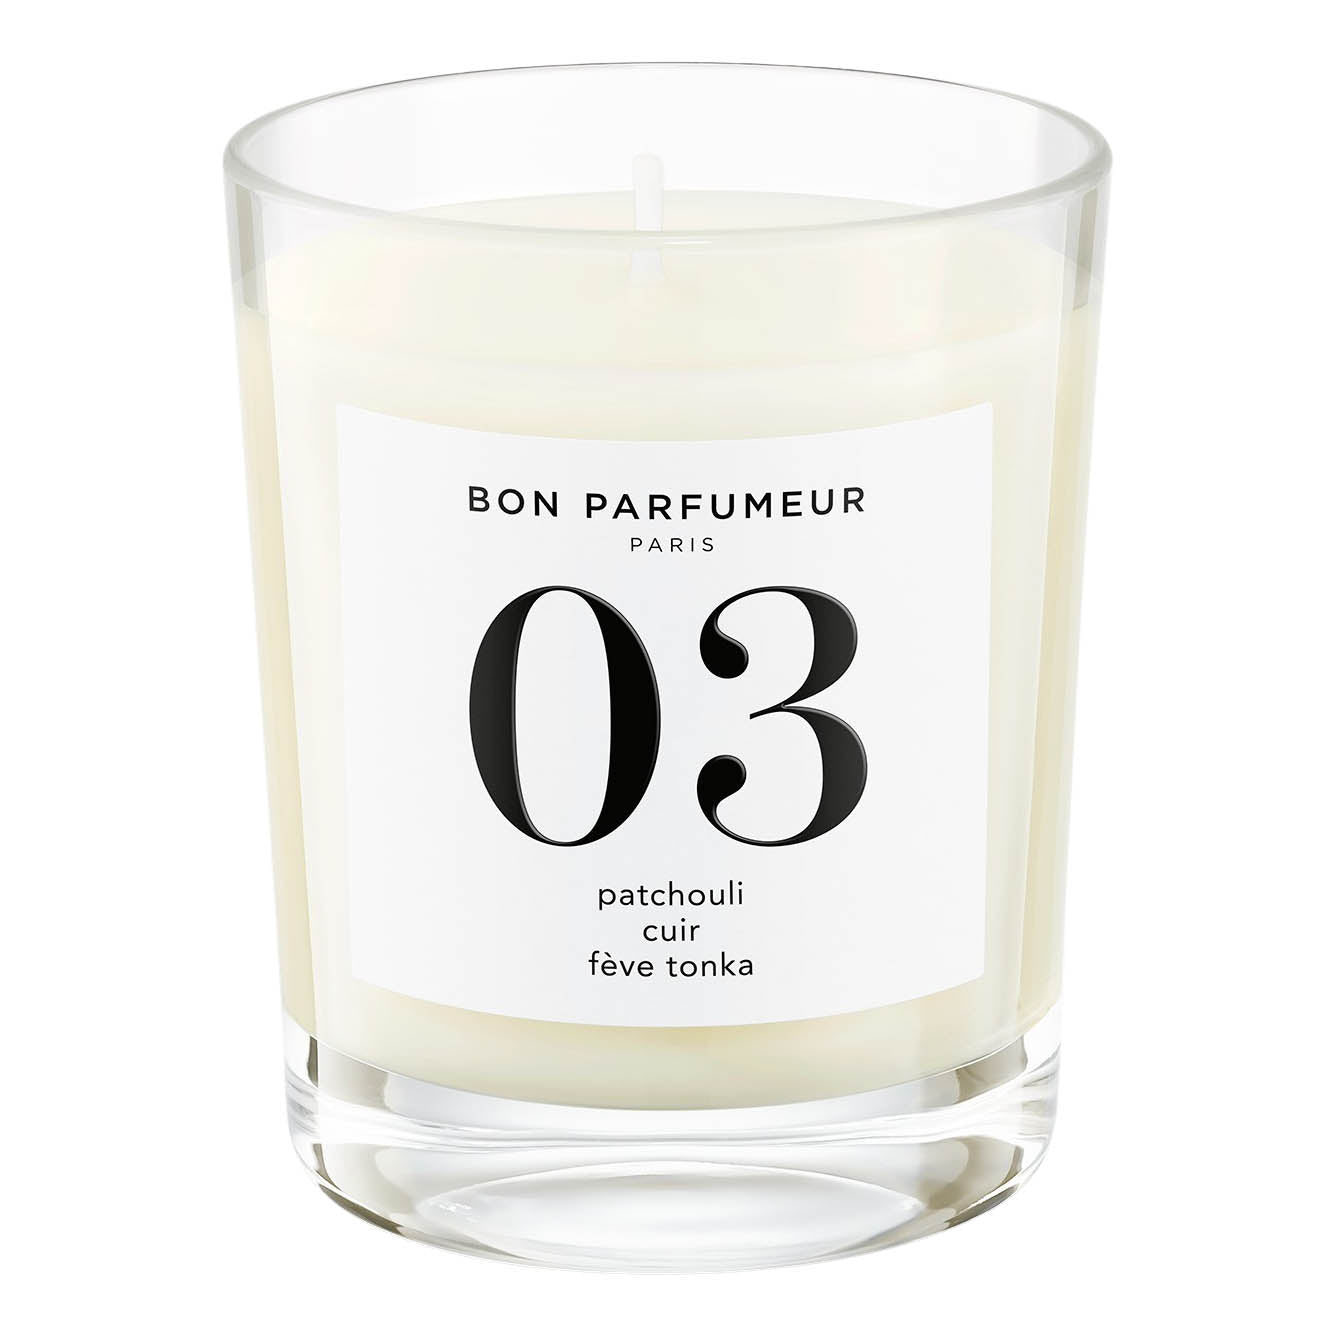 Bon Parfumeur duftlys 03 70 g